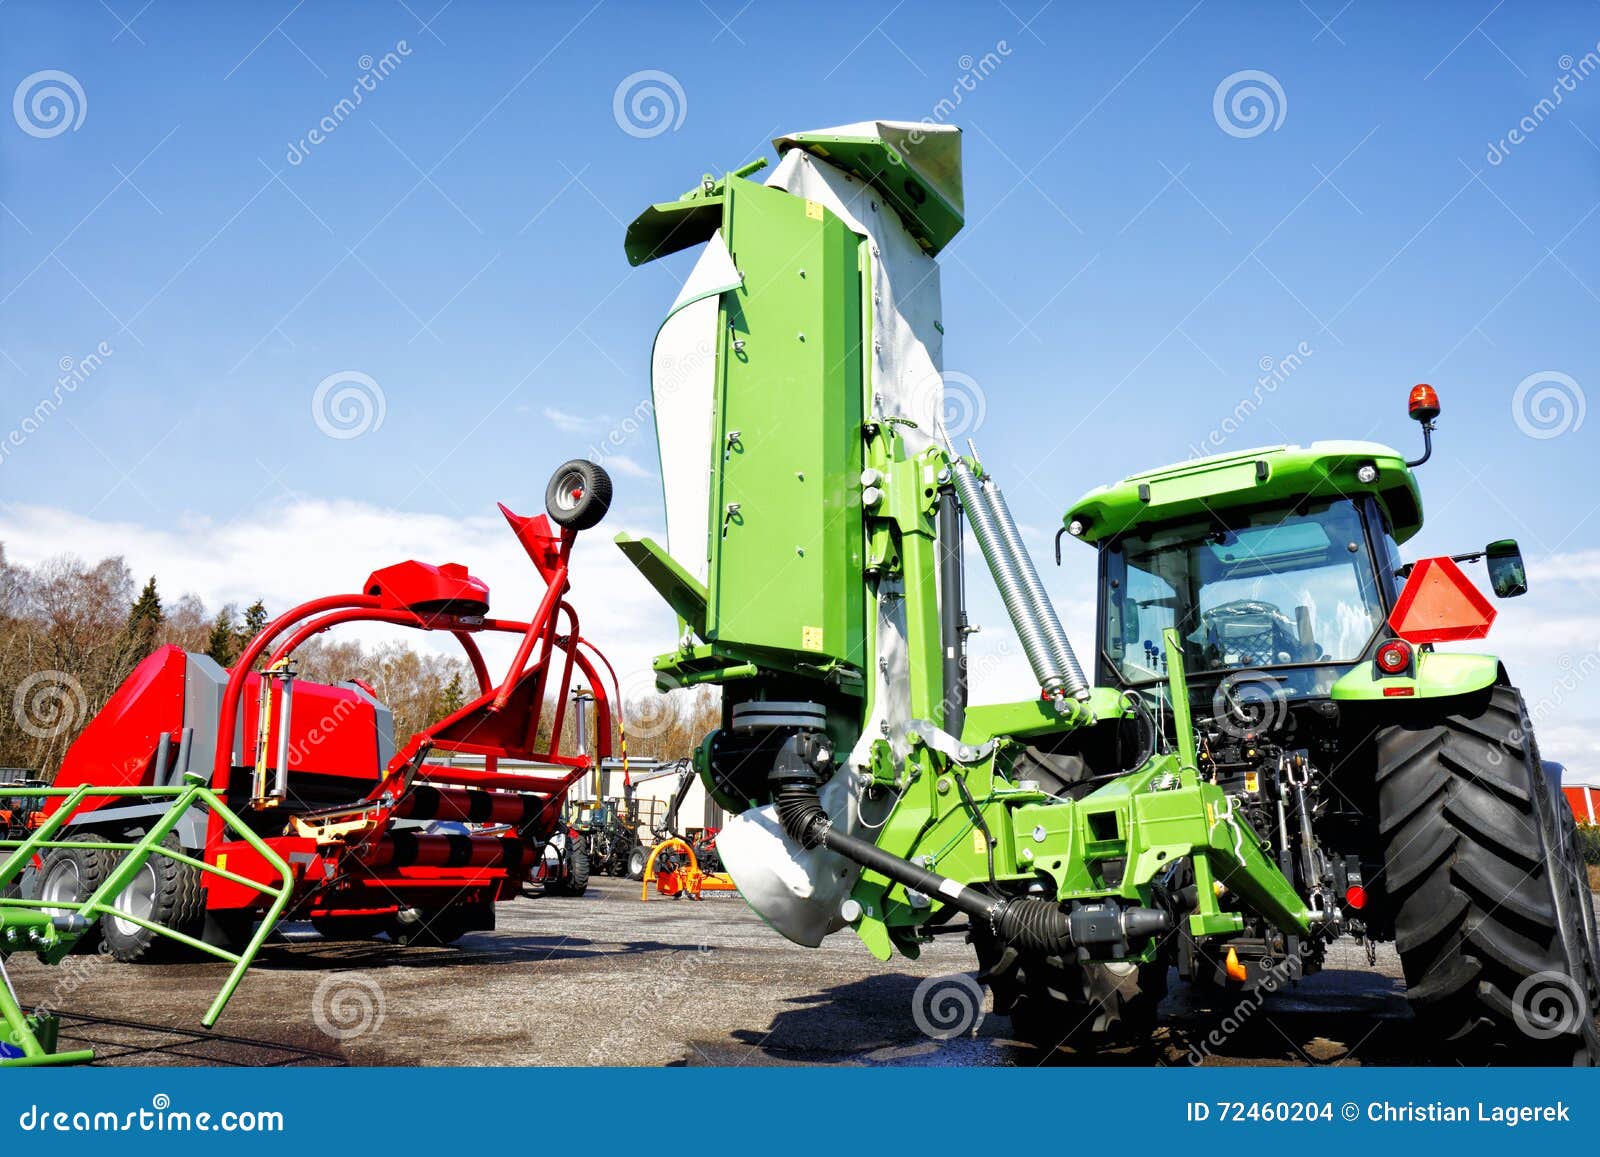 traktors and plows